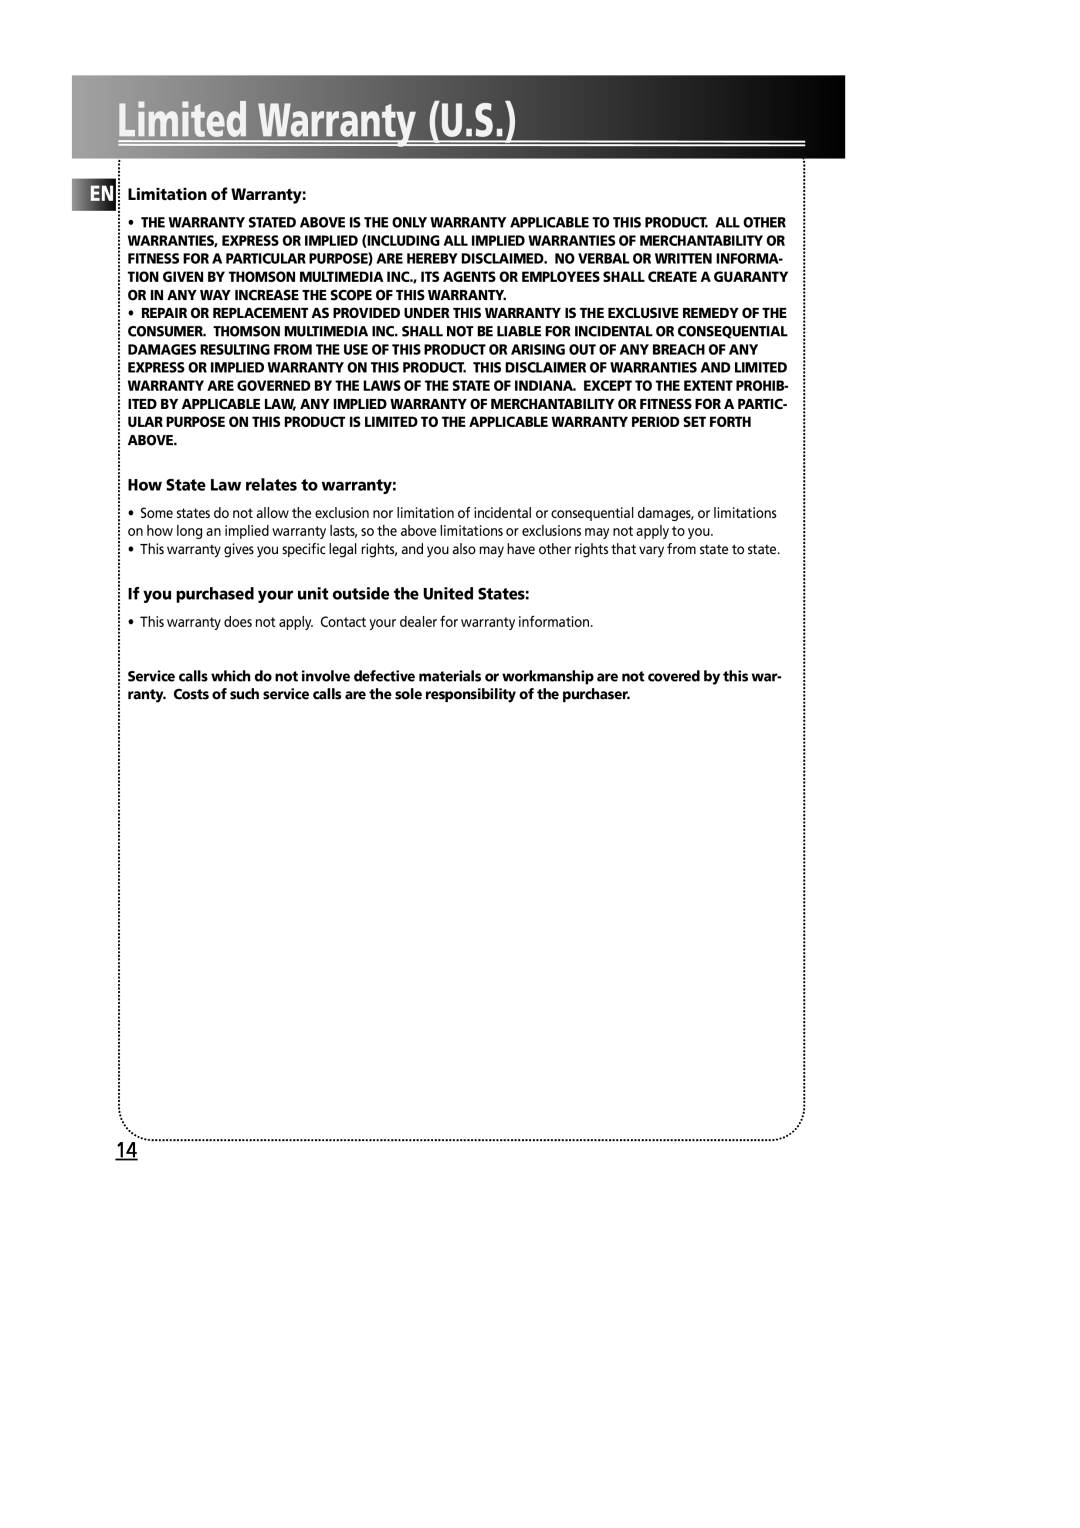 Technicolor - Thomson RS2600 manual Limited Warranty U.S, EN Limitation of Warranty, How State Law relates to warranty 